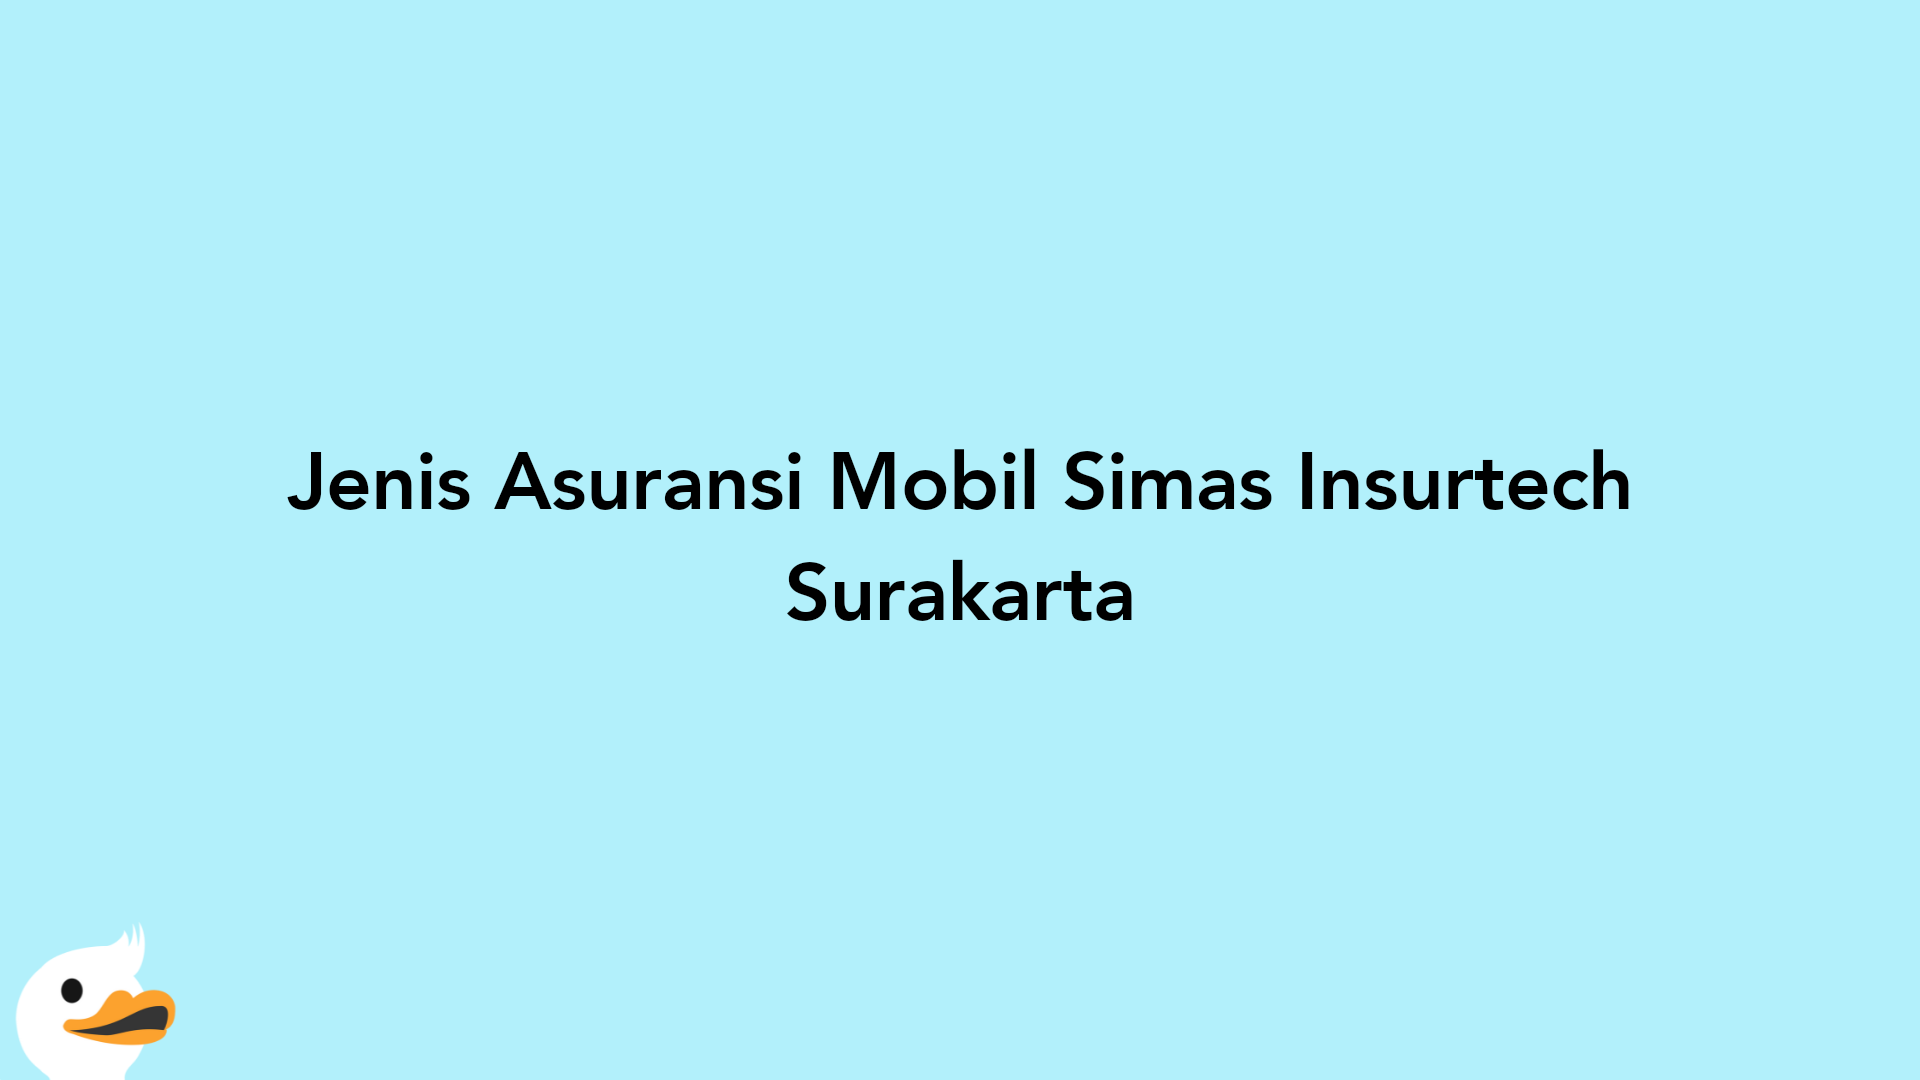 Jenis Asuransi Mobil Simas Insurtech Surakarta